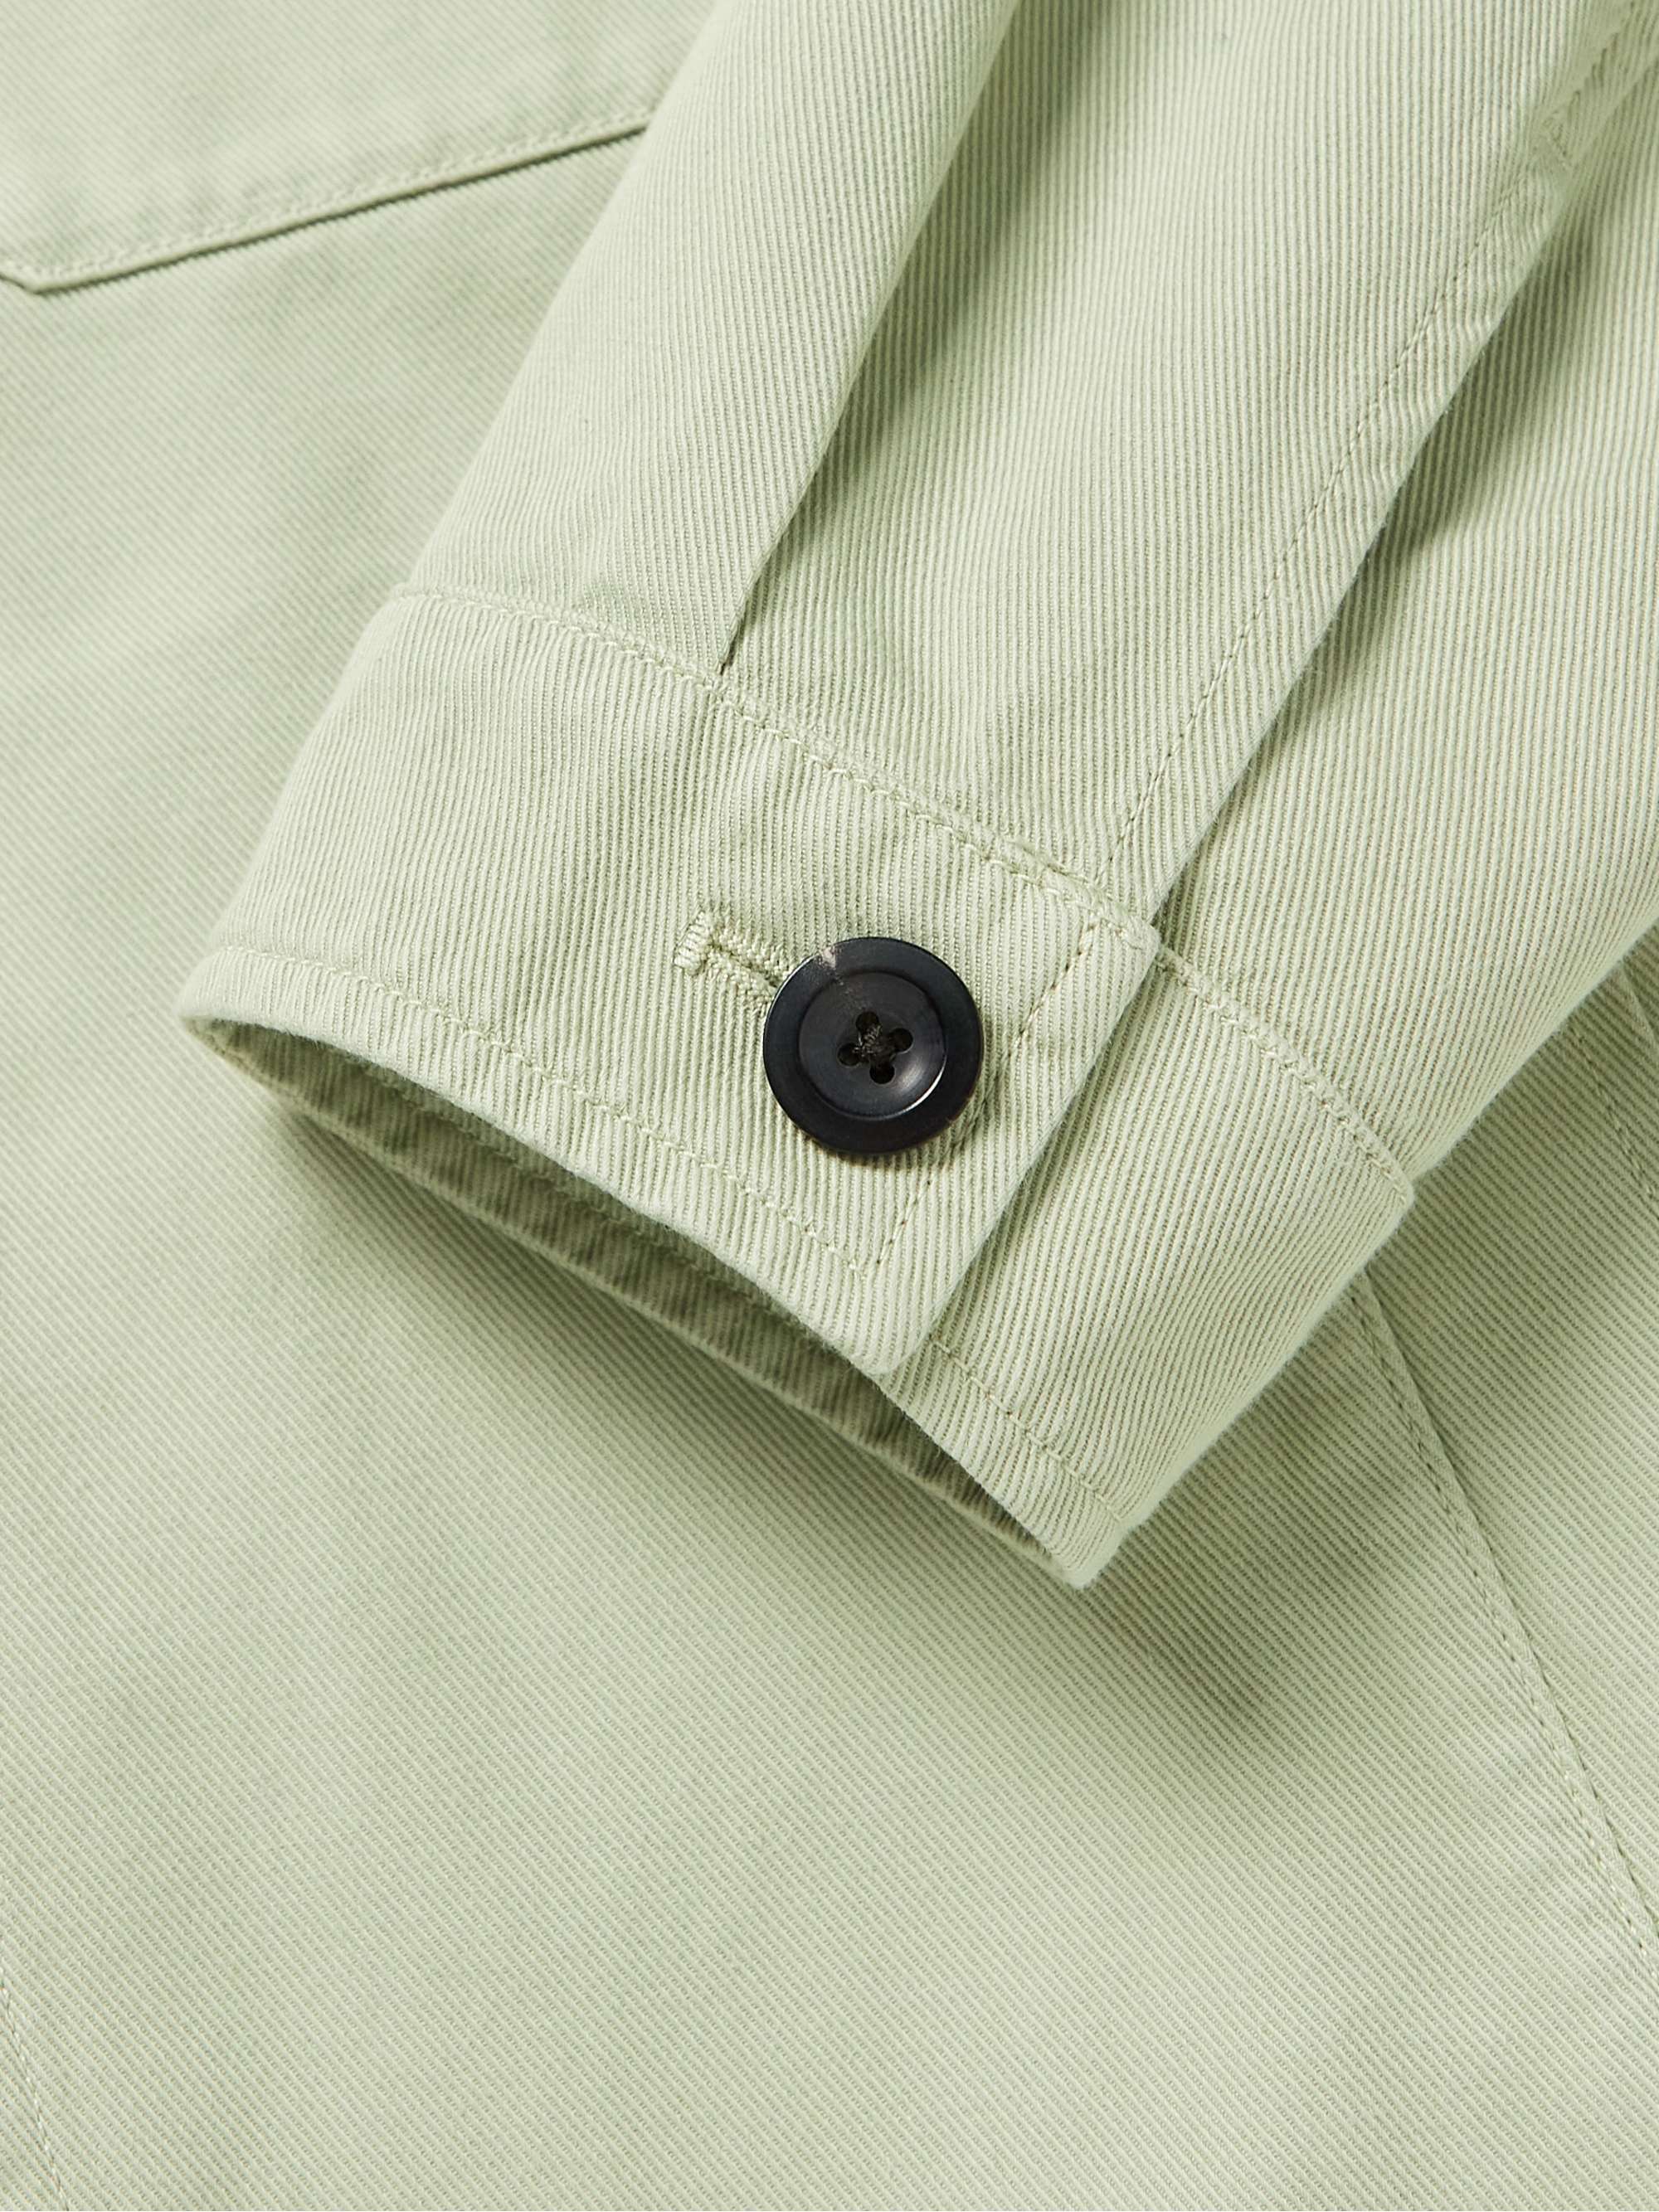 MR P. Garment-Dyed Cotton-Twill Overshirt